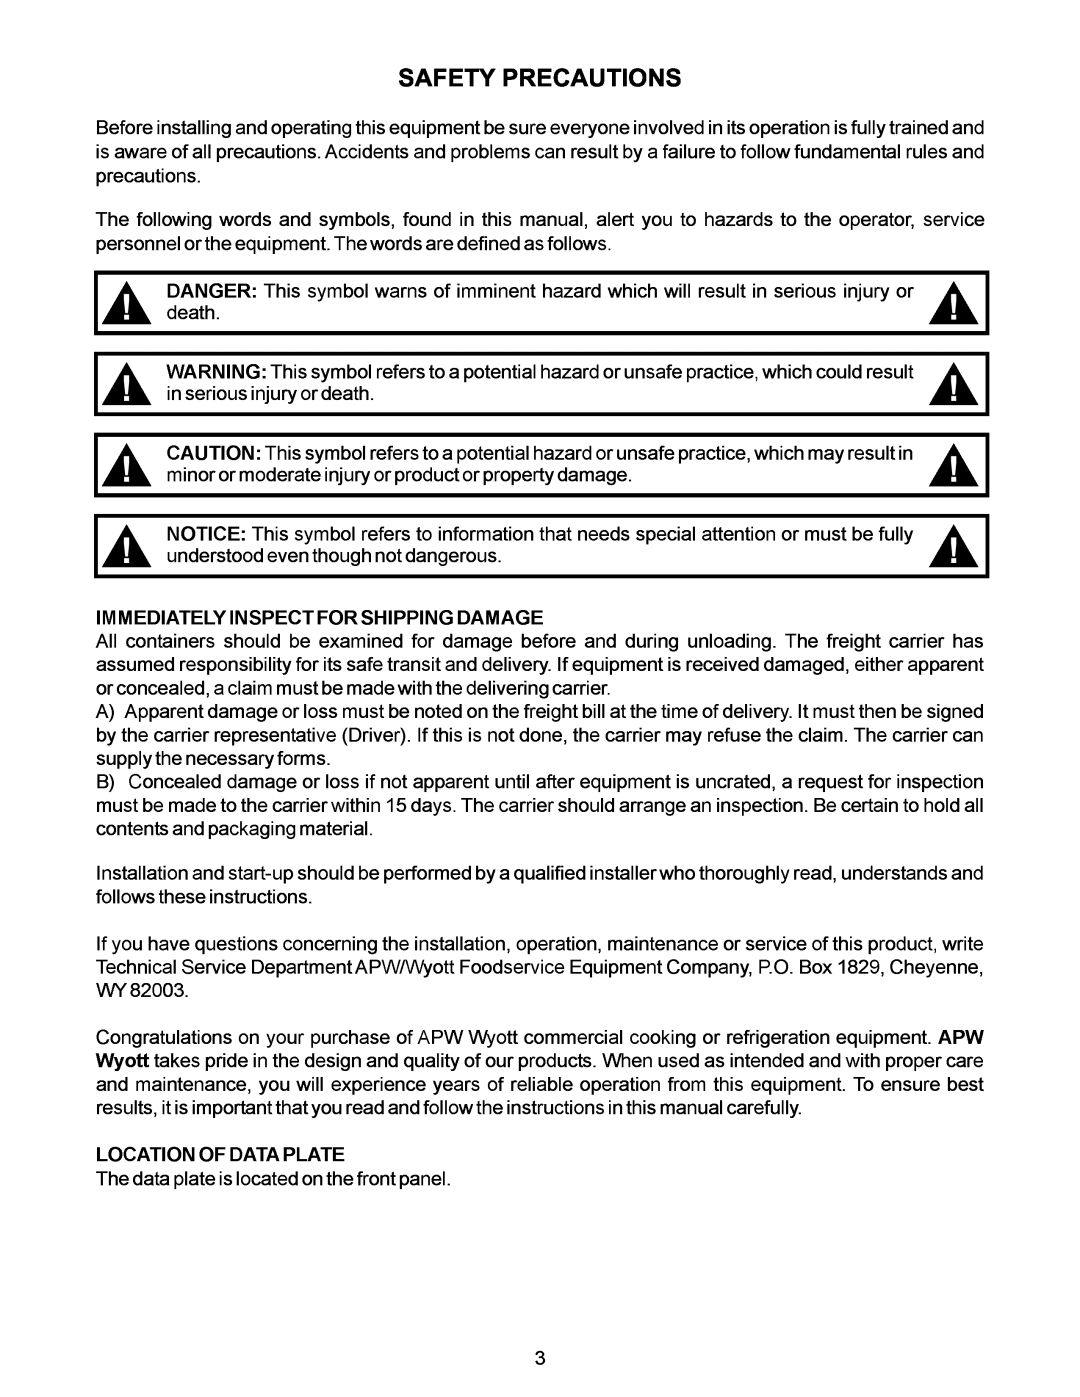 APW Wyott 48H, EG 24H, 36H manual Safety Precautions 